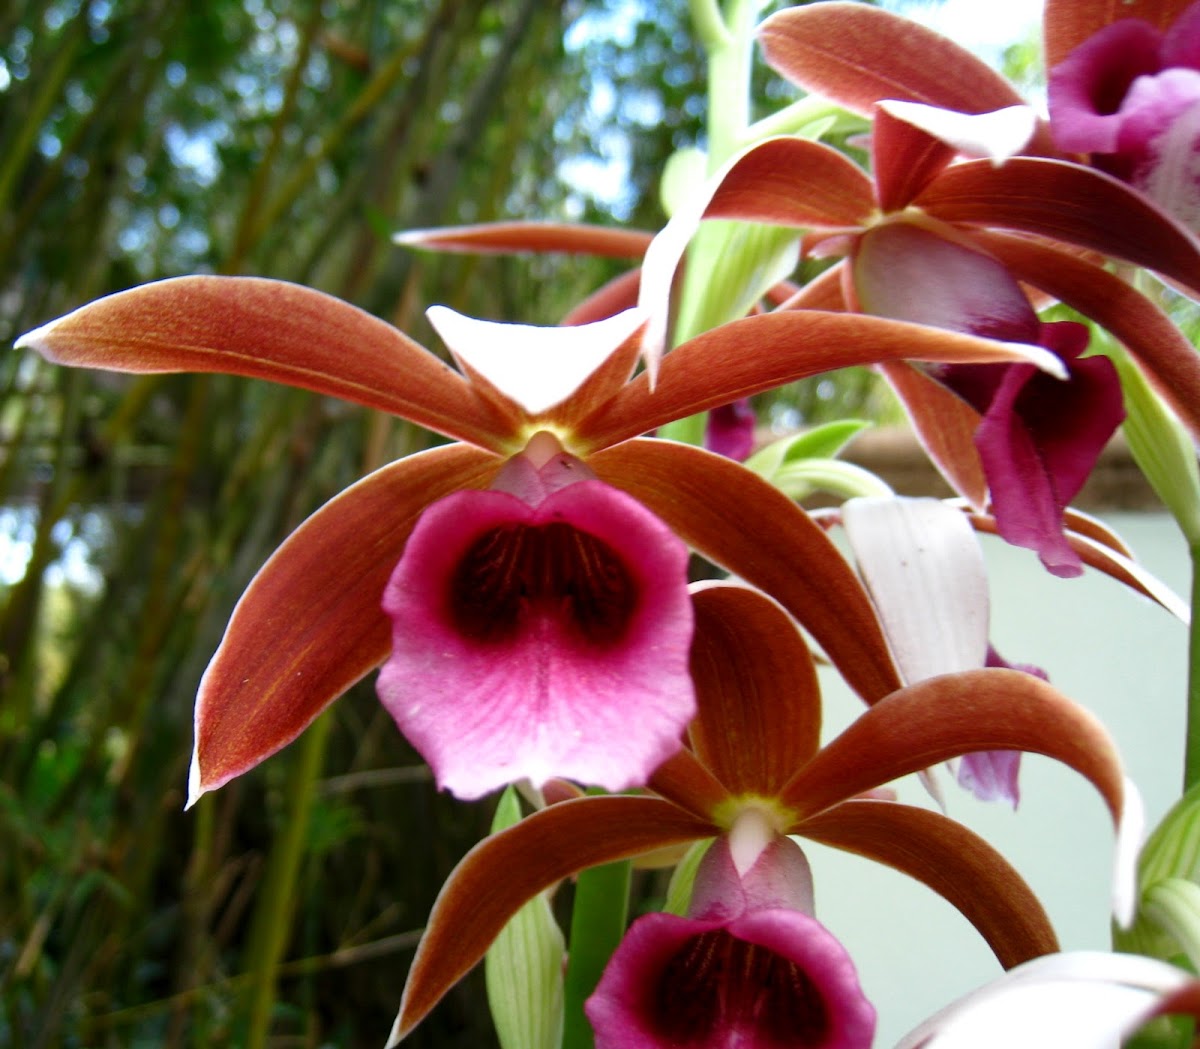 nun's-hood orchid